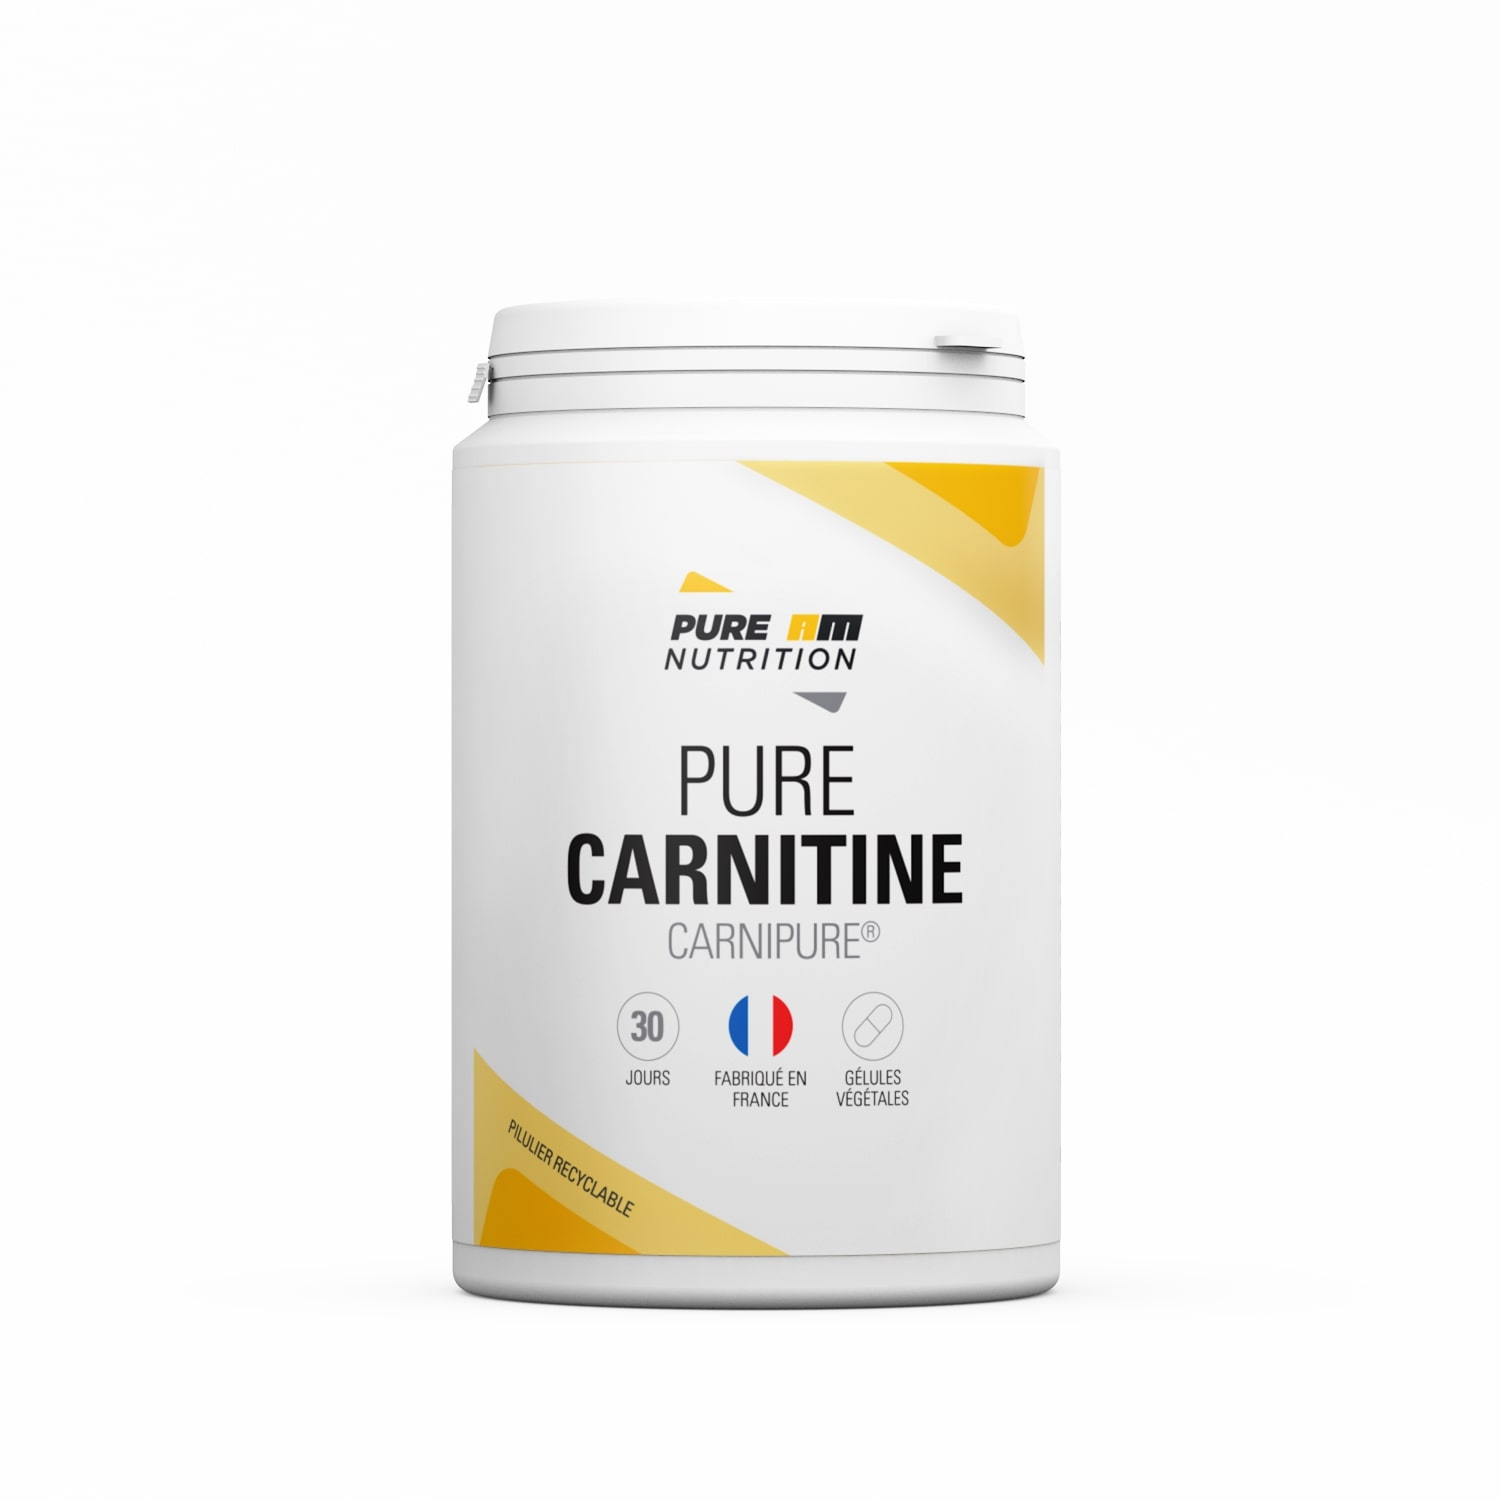  Pure AM Nutrition PURE Carnitine Carnipure®